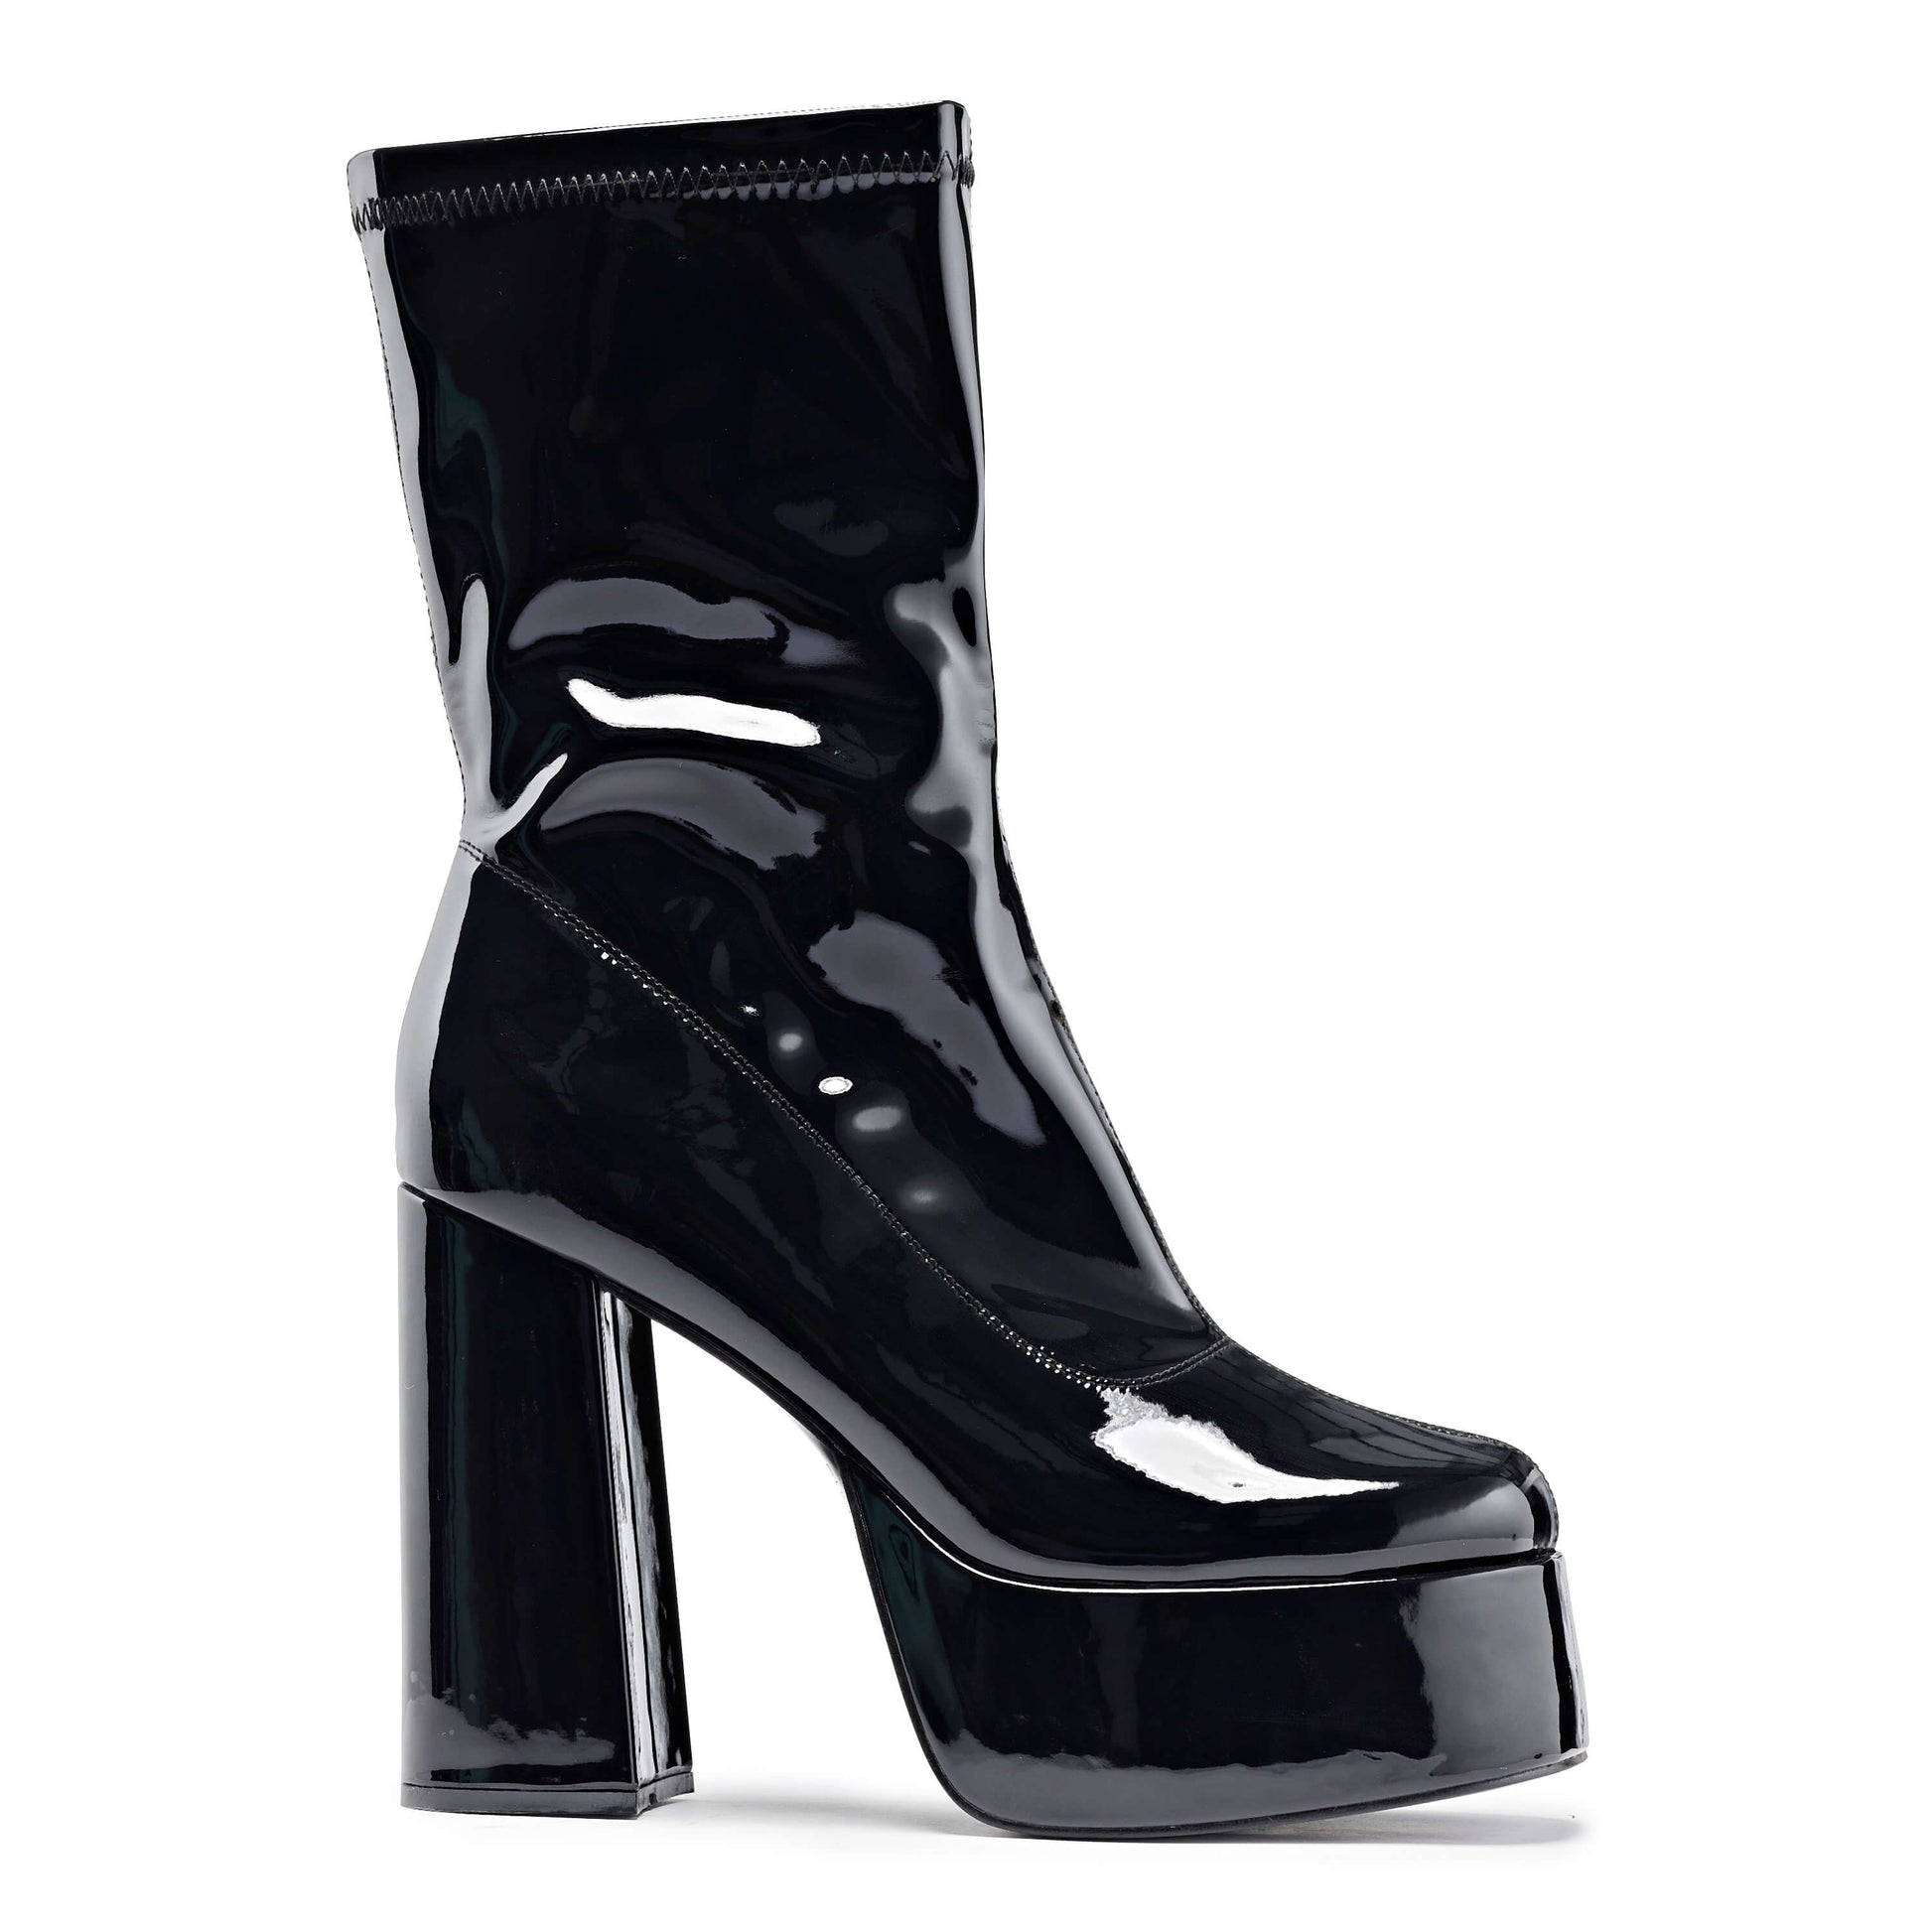 Delano Men's Black Patent Platform Heeled Boots - Ankle Boots - KOI Footwear - Black - Side View